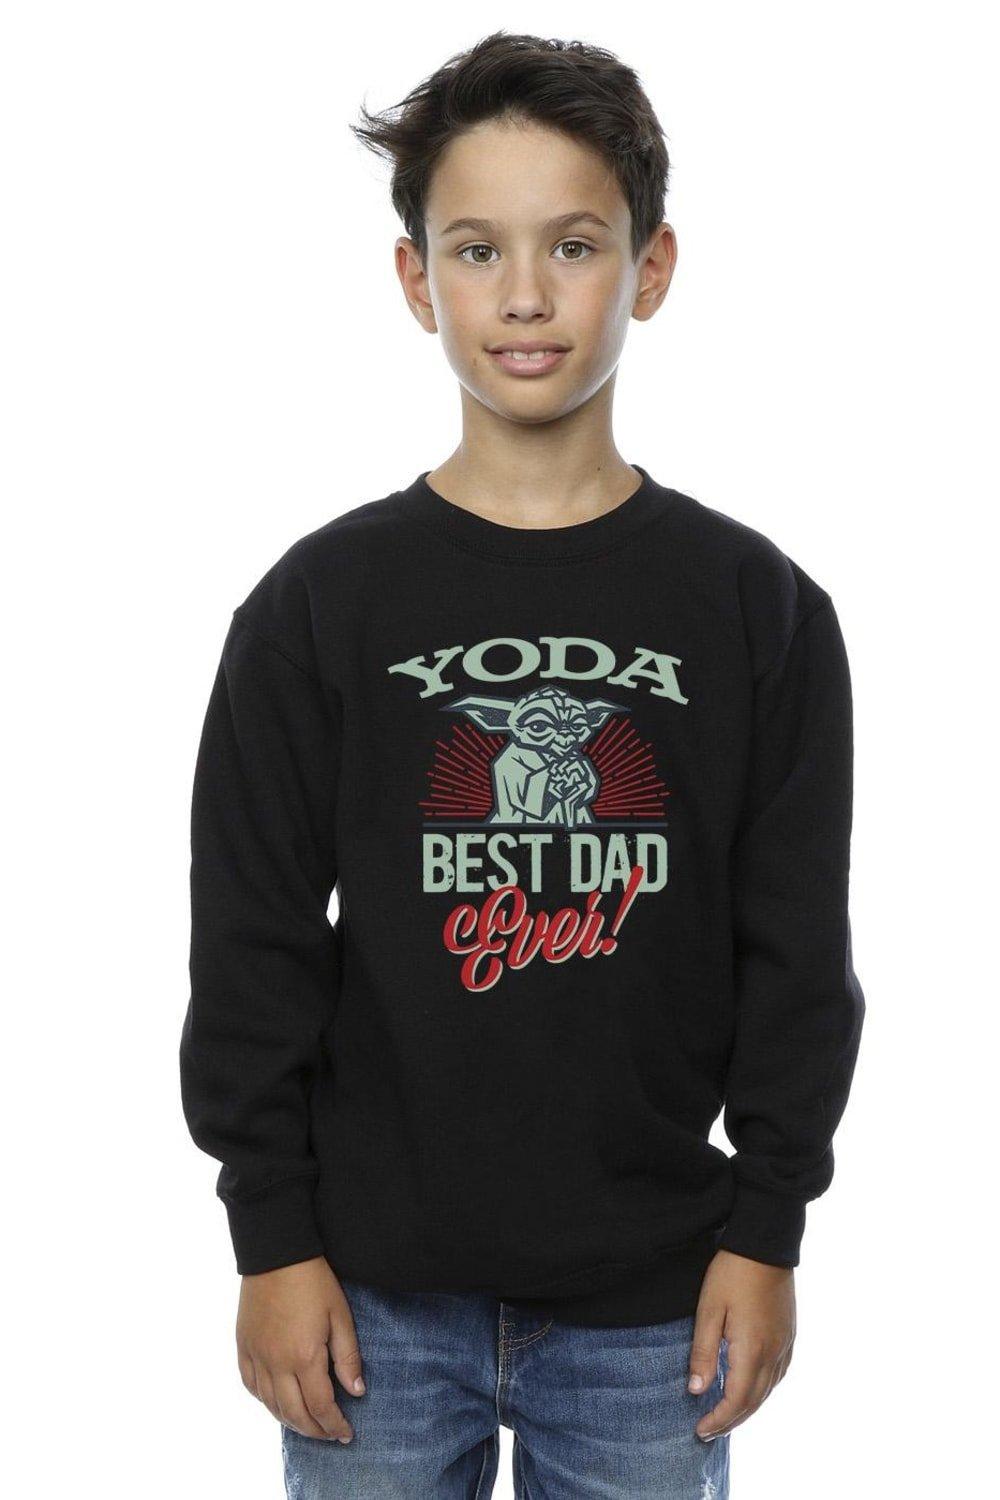 Mandalorian Yoda Dad Sweatshirt